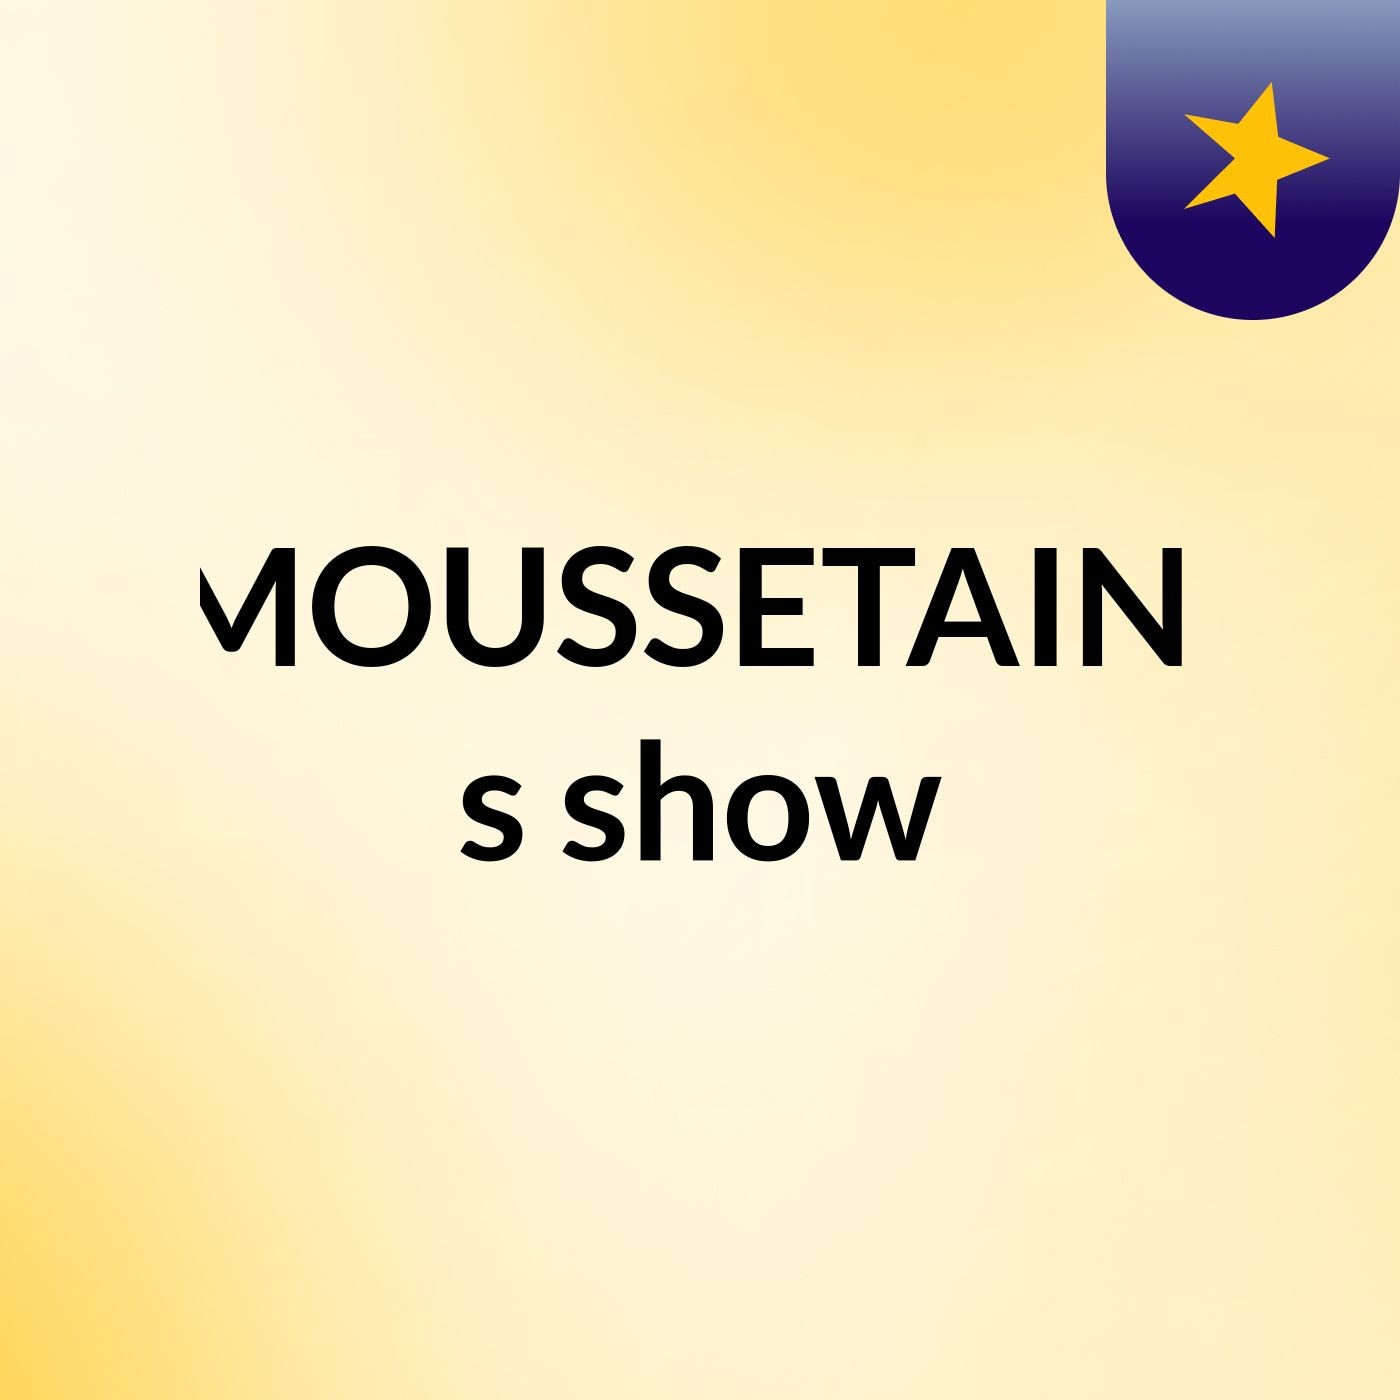 MOUSSETAINI's show